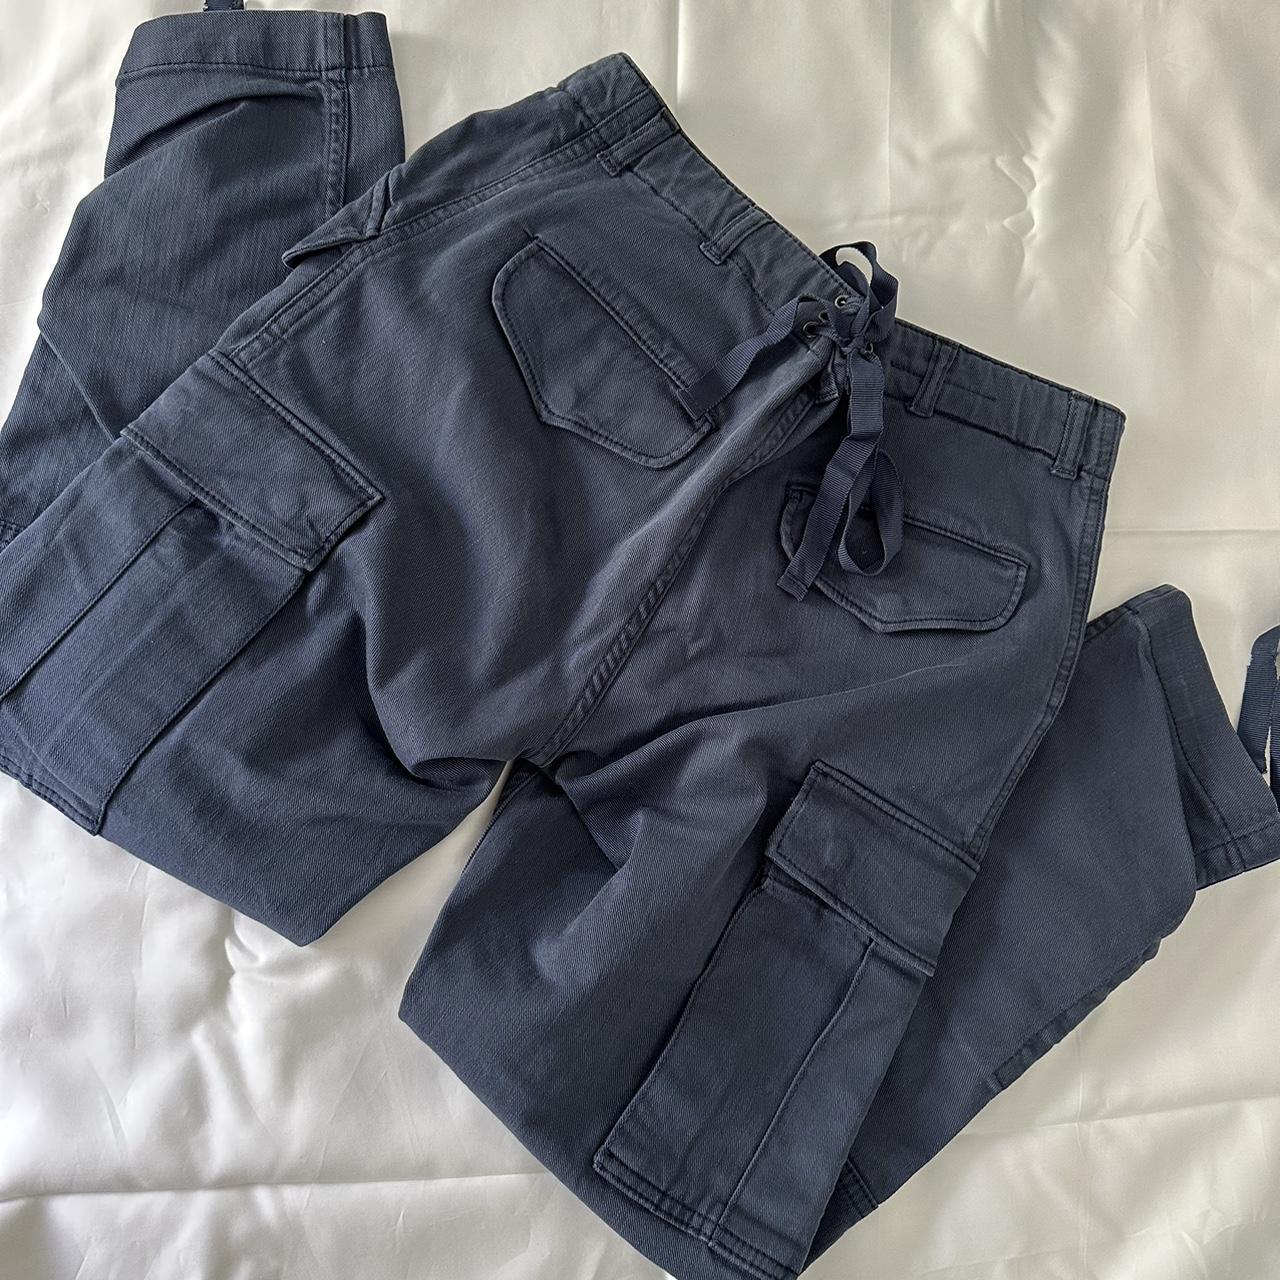 Moschino Cheap & Chic Women's Navy Trousers (2)